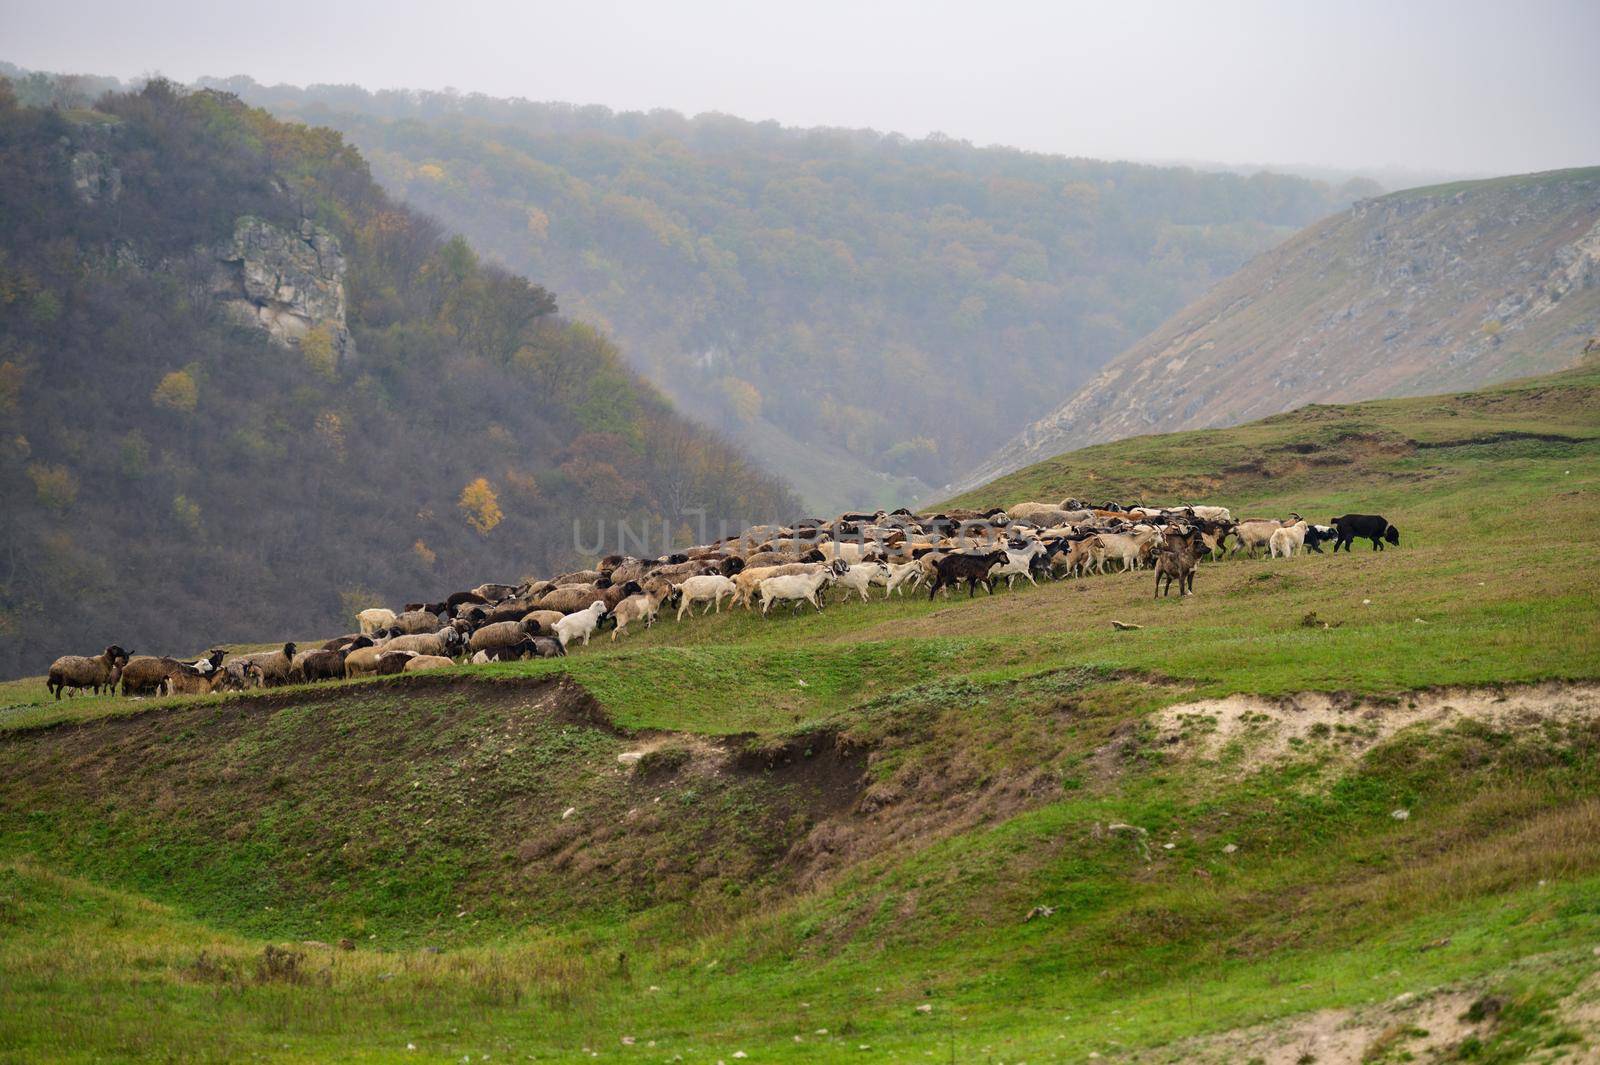 Hills landscape with grazing sheeps flock, north of Moldova, near Volodeni village